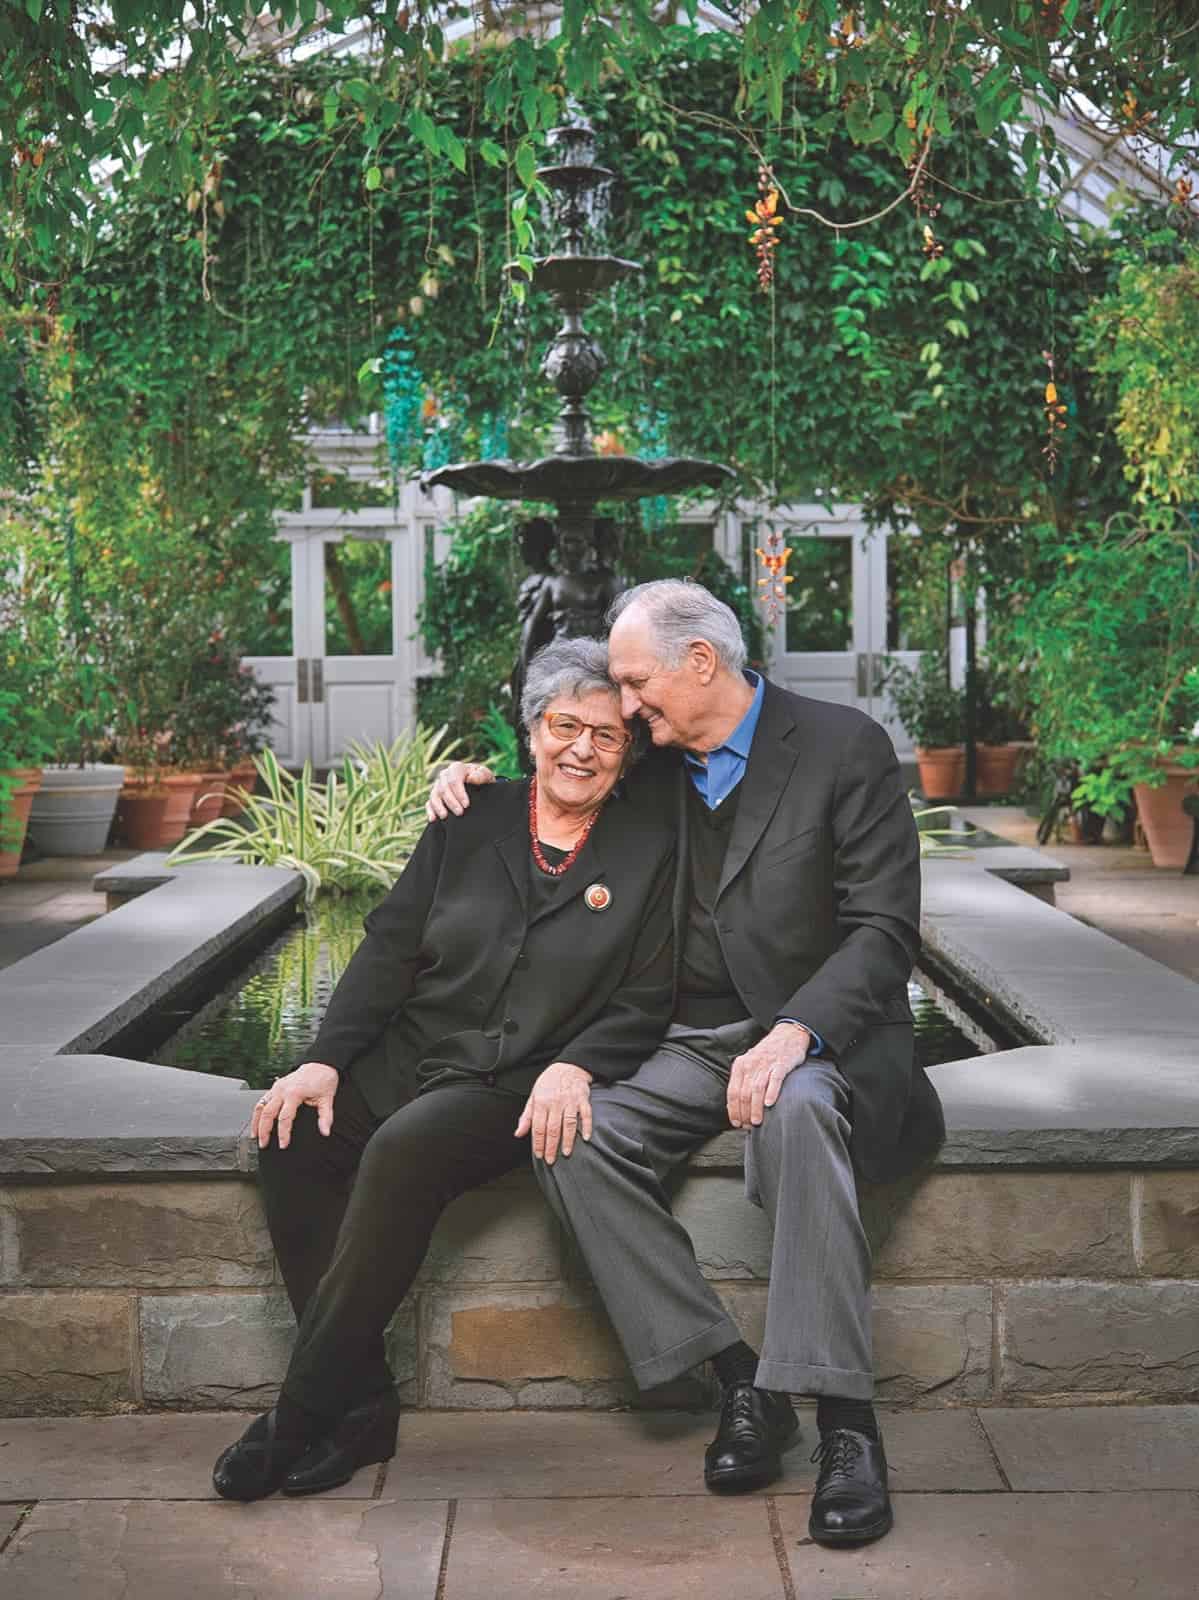 Alan Alda with his wife Arlene